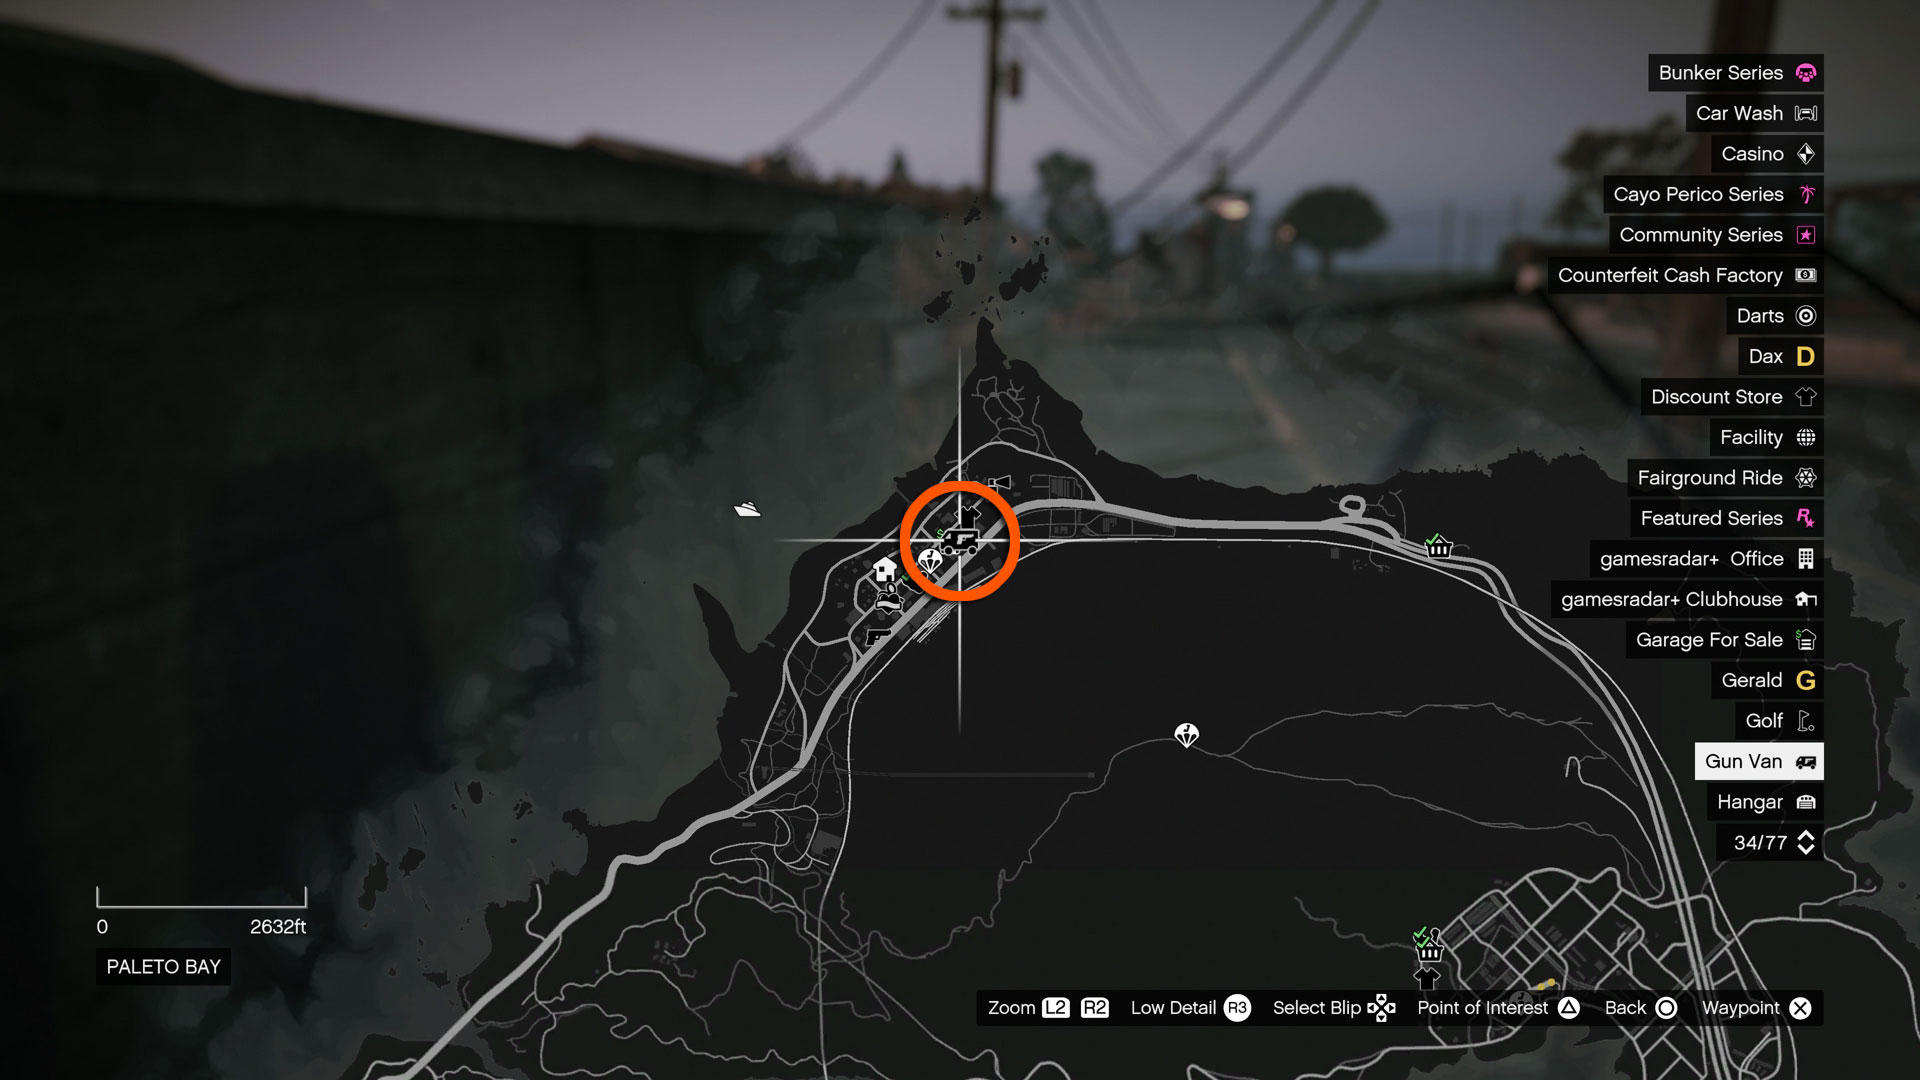 GTA Online Gun Van map showing Paleto Bay location